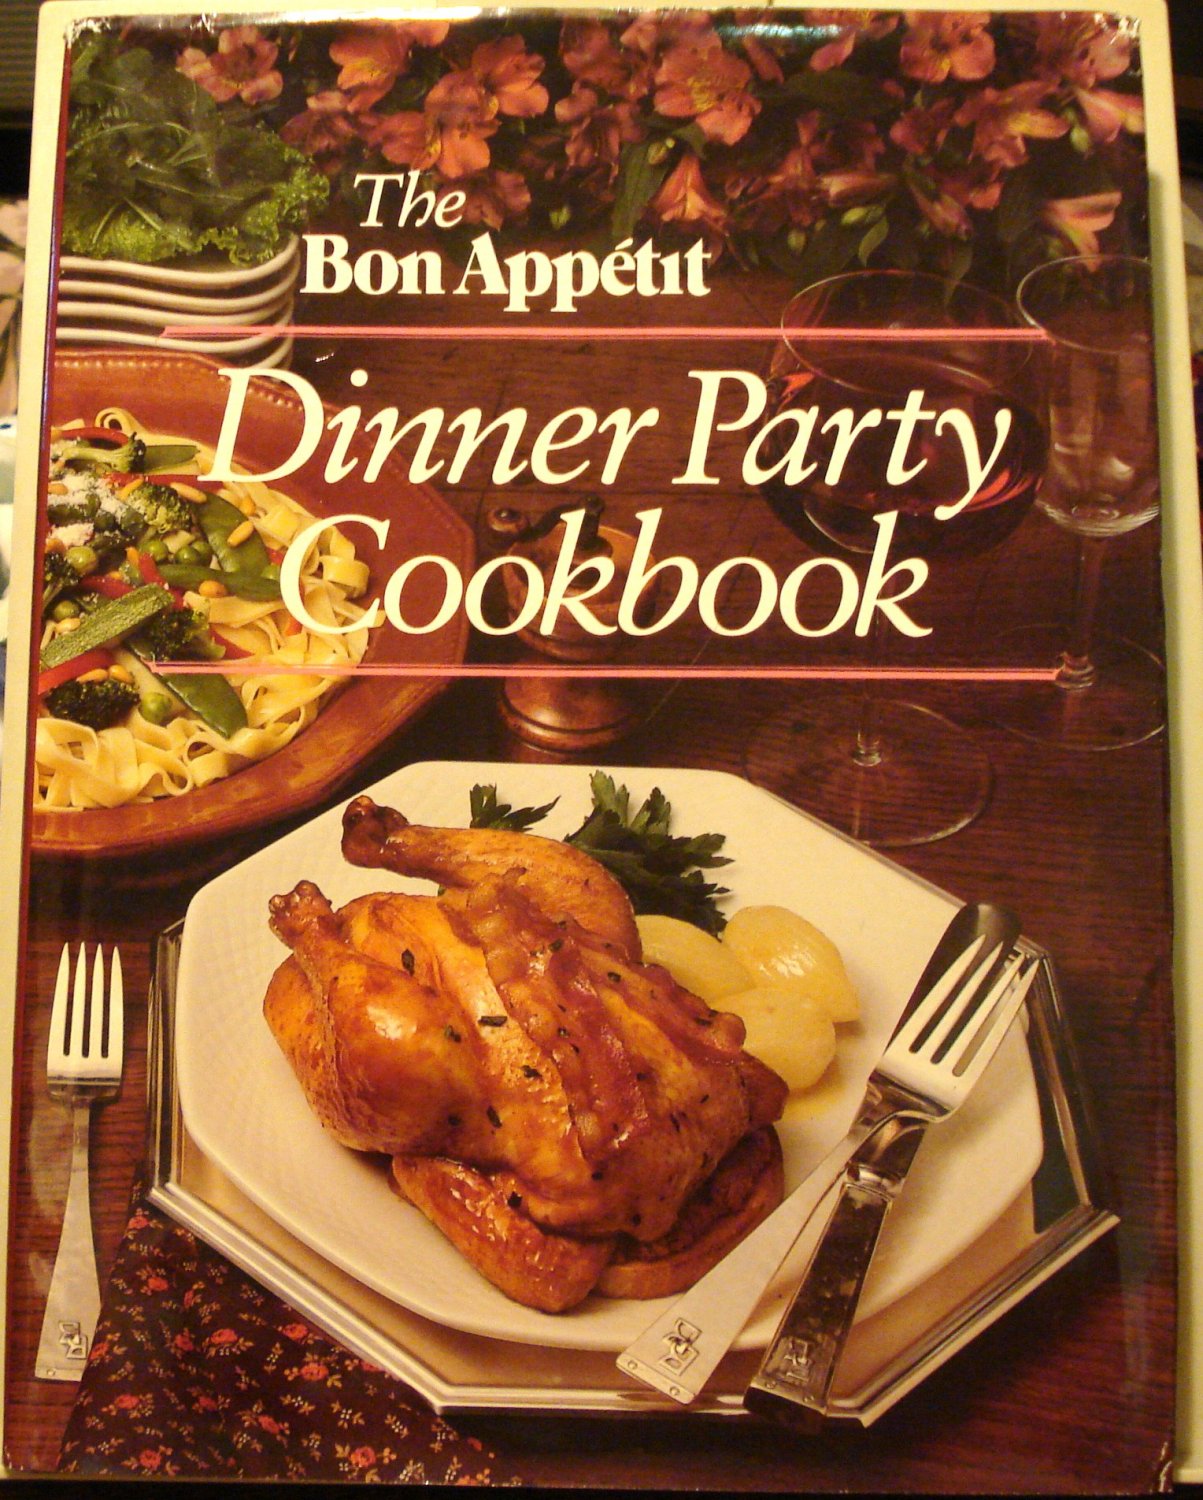 The Bon Appetit Dinner Party Cookbook 1983 HB DJ 1st ed near fine hc3239